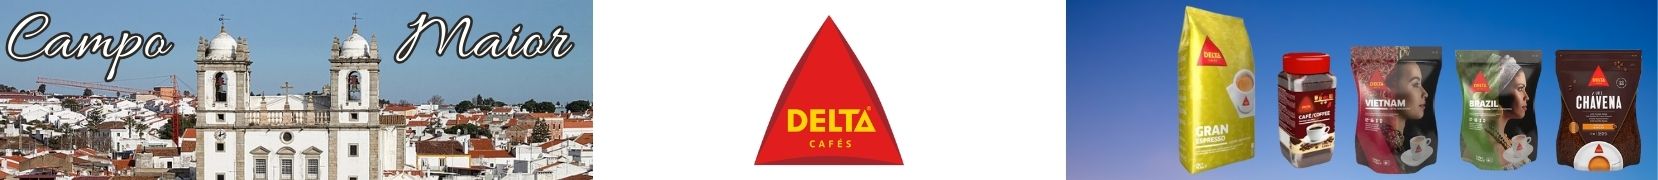 Delta Cafes